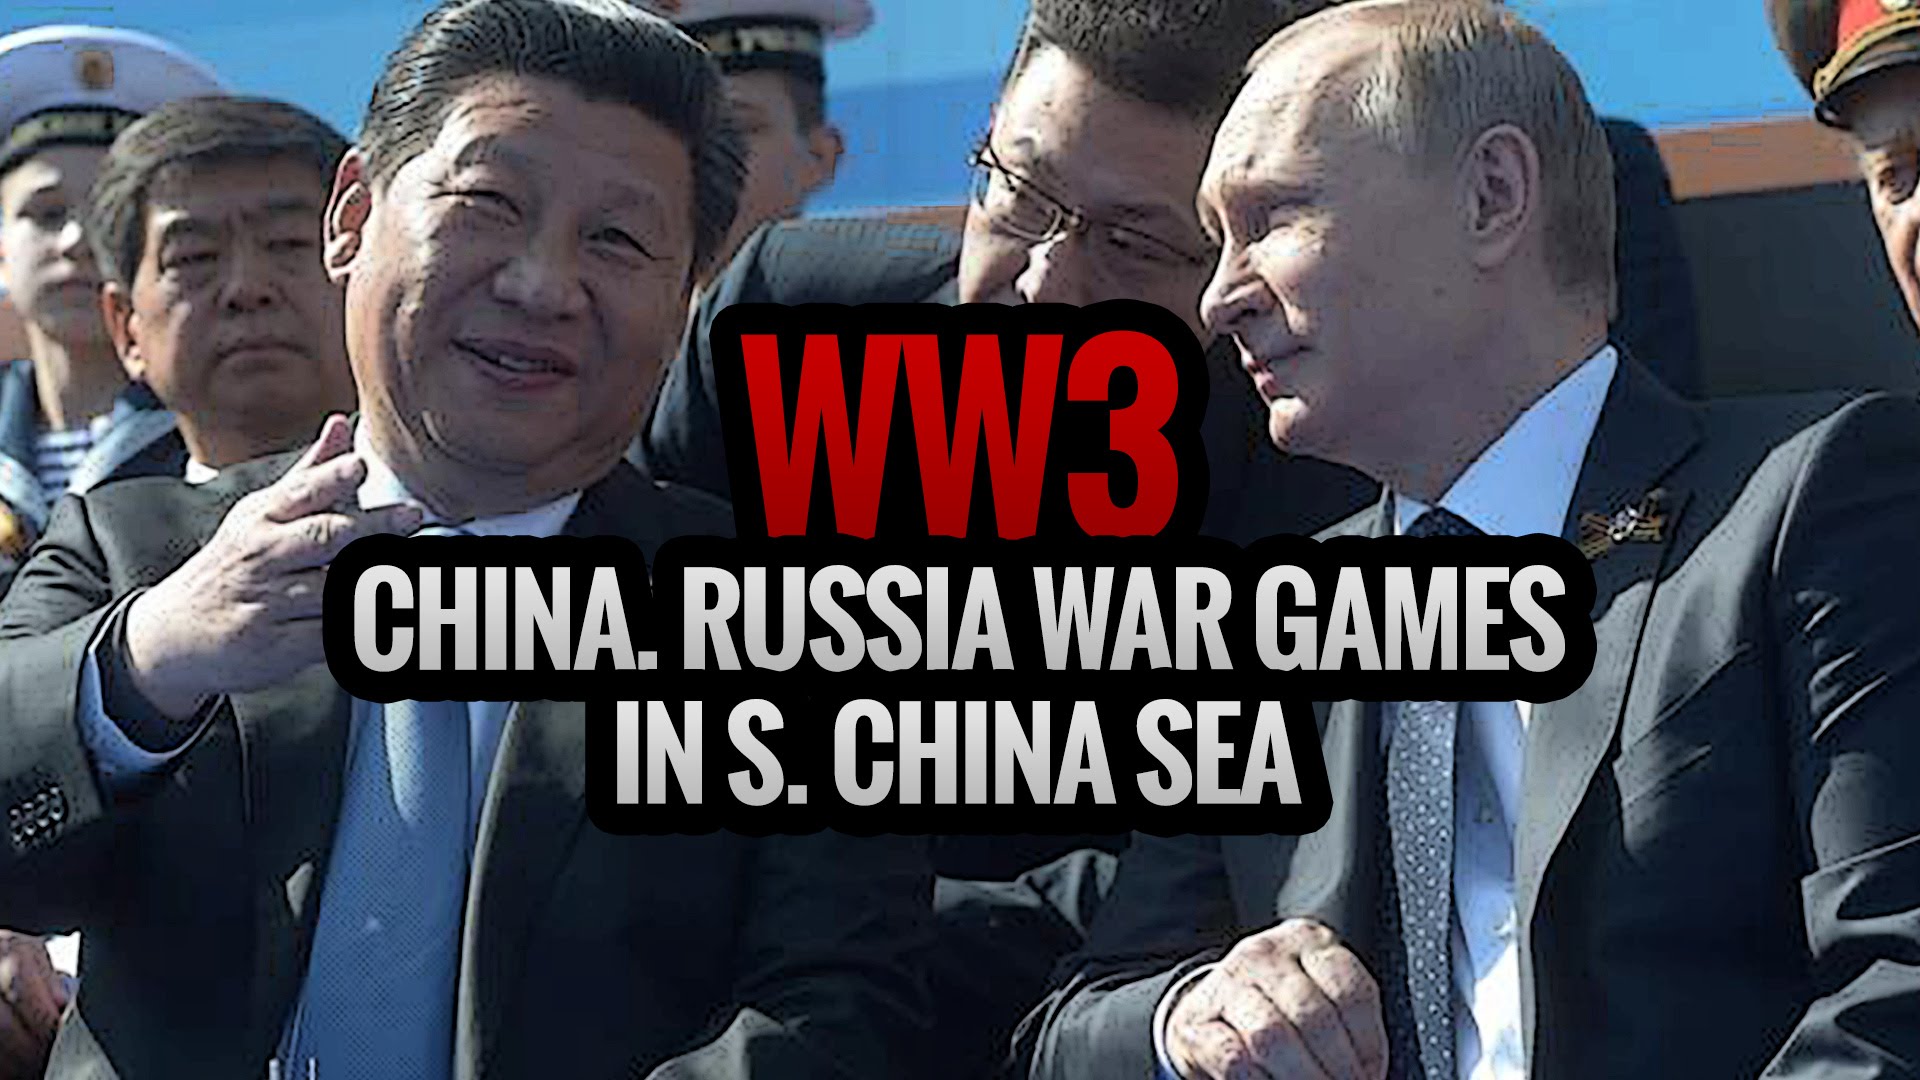 WW3- China, Russia War Games in S. China Sea